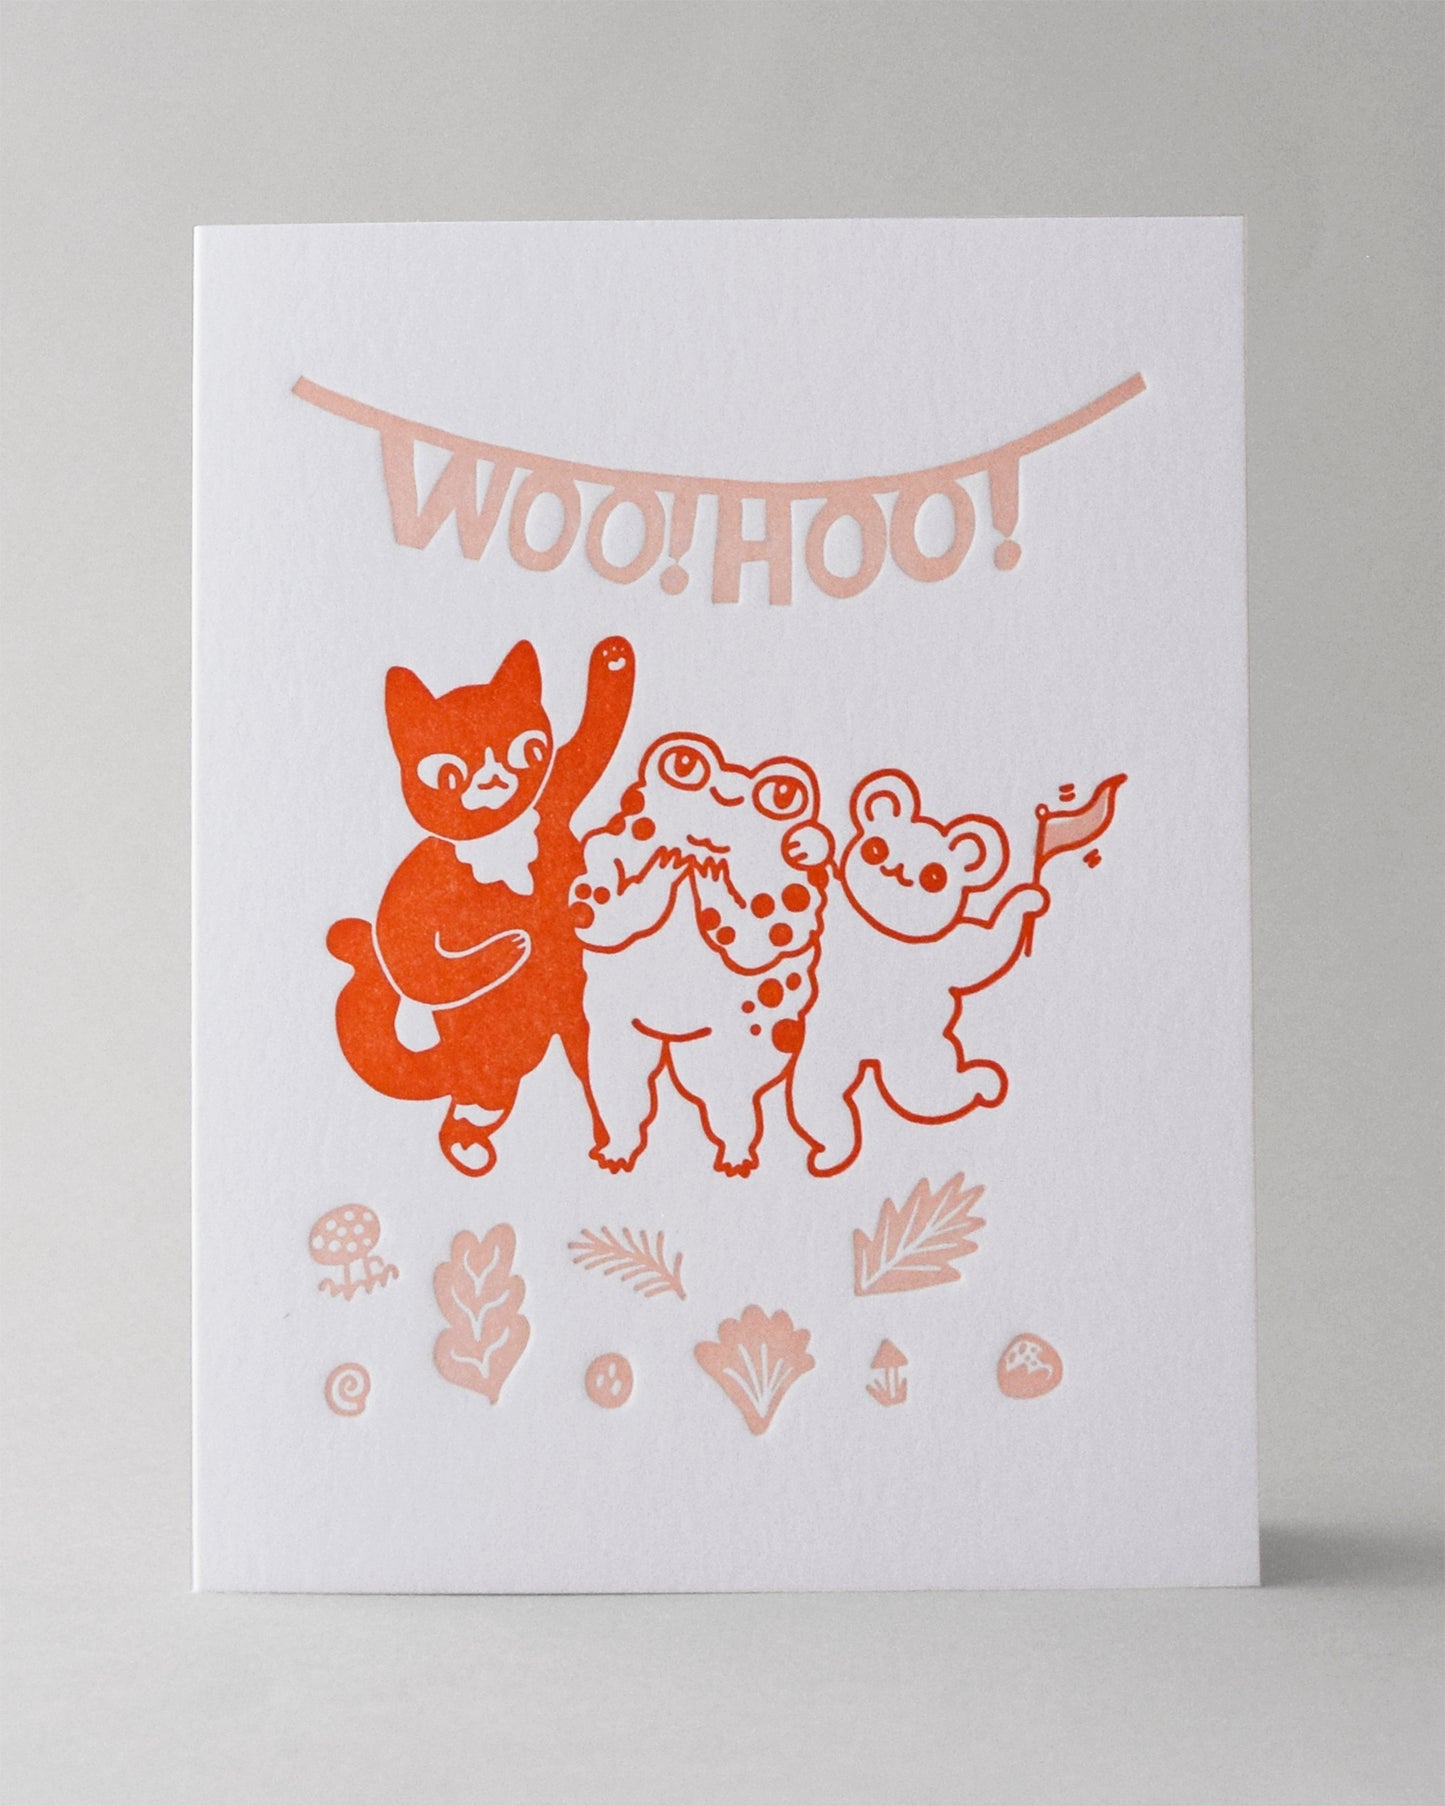 Woohoo Friends Card, Jen Cooney x Meshwork, #128 (limited edition)